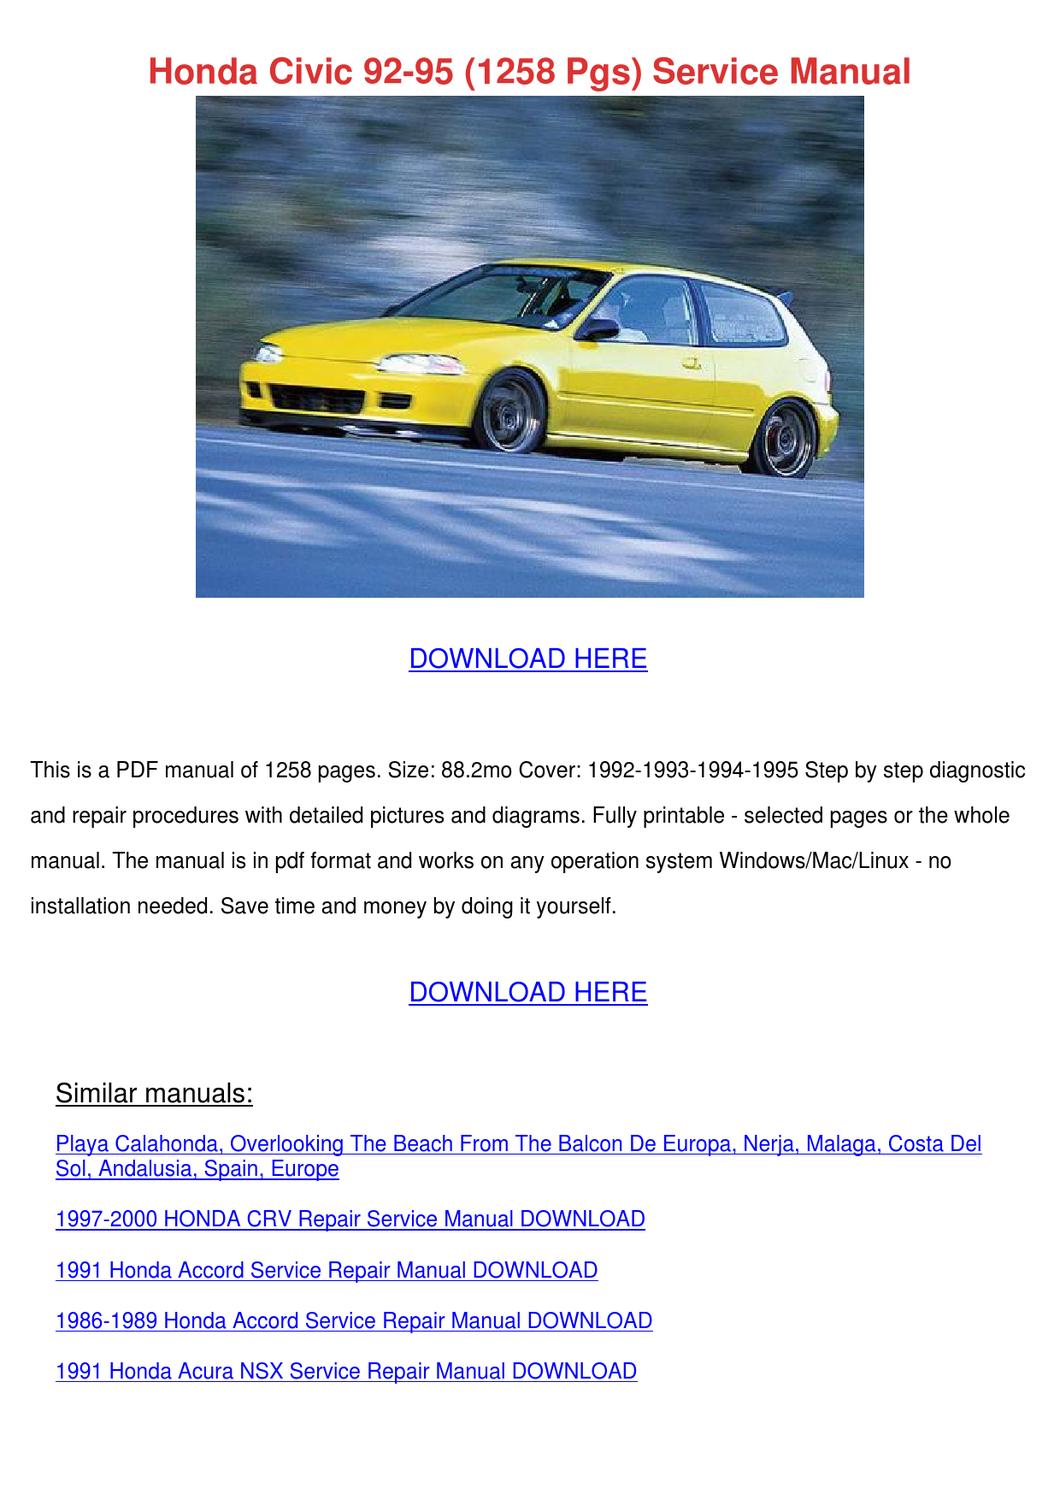 1997 Honda Accord Service Manual Download